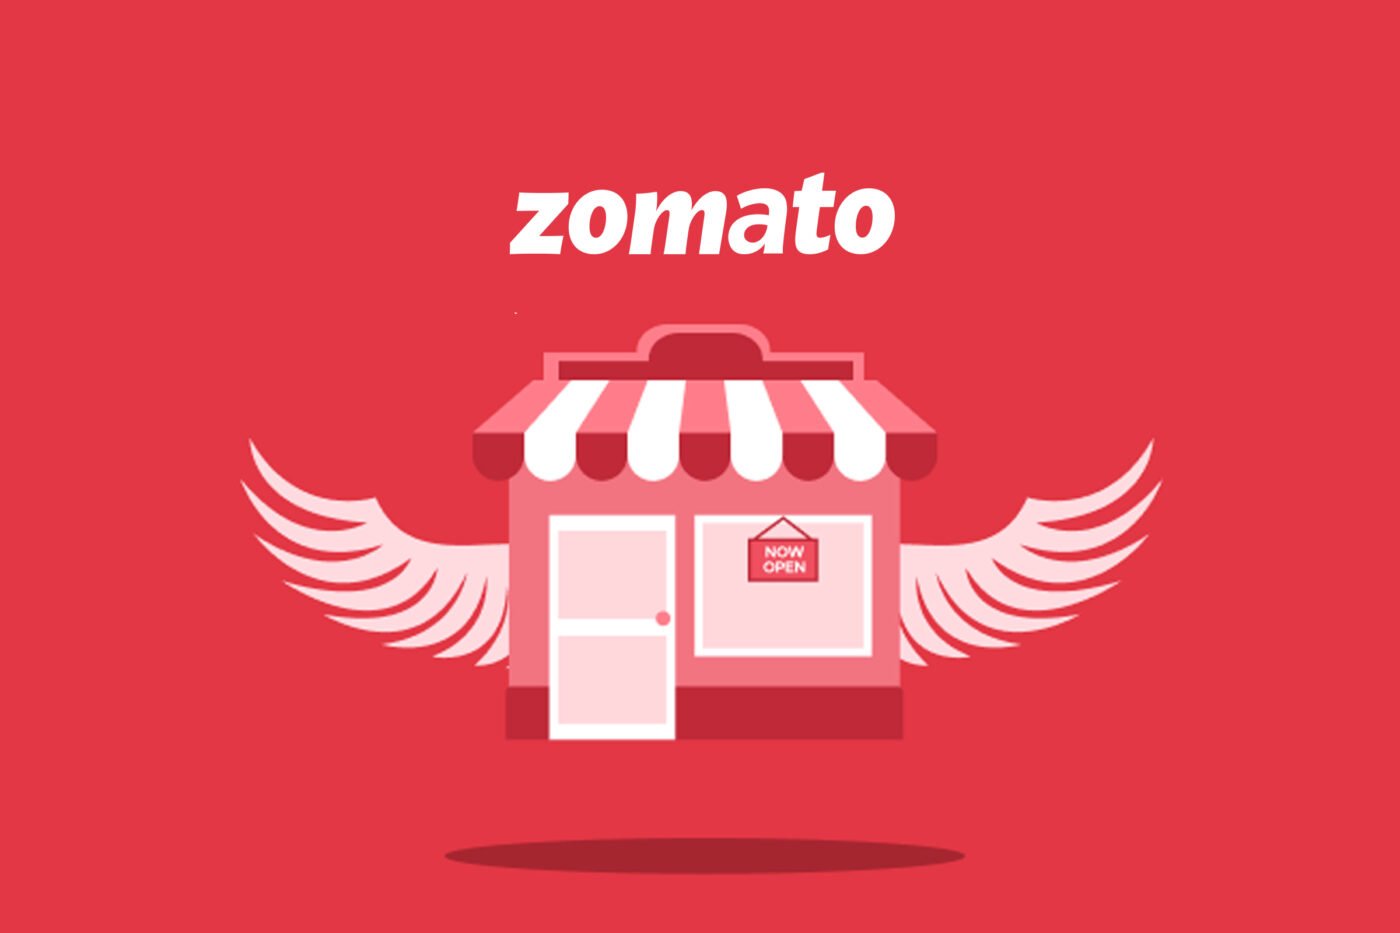 'Zomato Wings' is no longer operating on Zomato